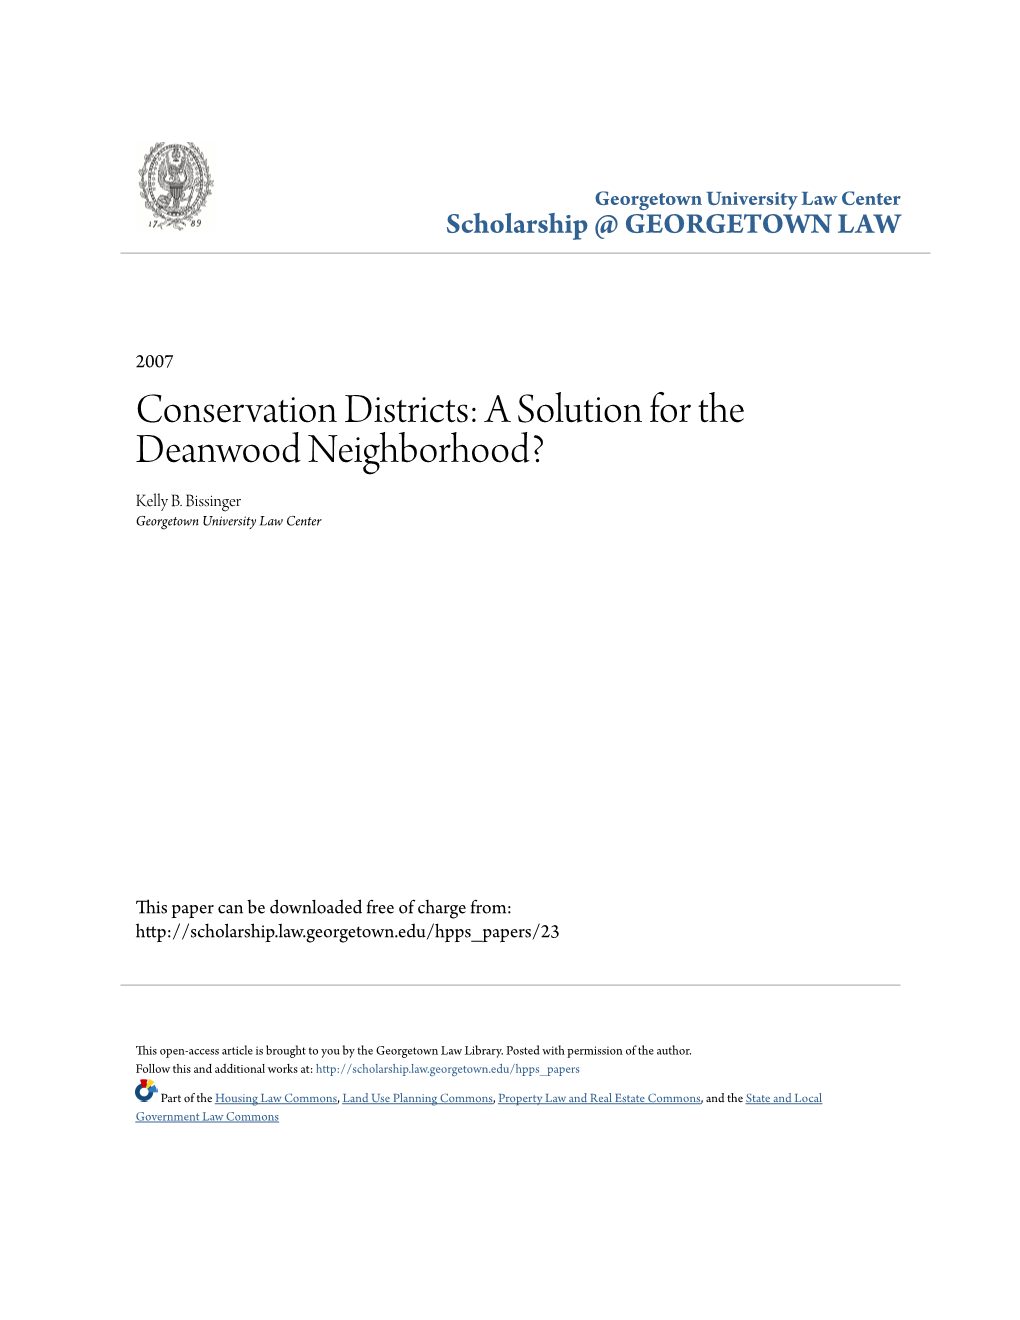 A Solution for the Deanwood Neighborhood? Kelly B